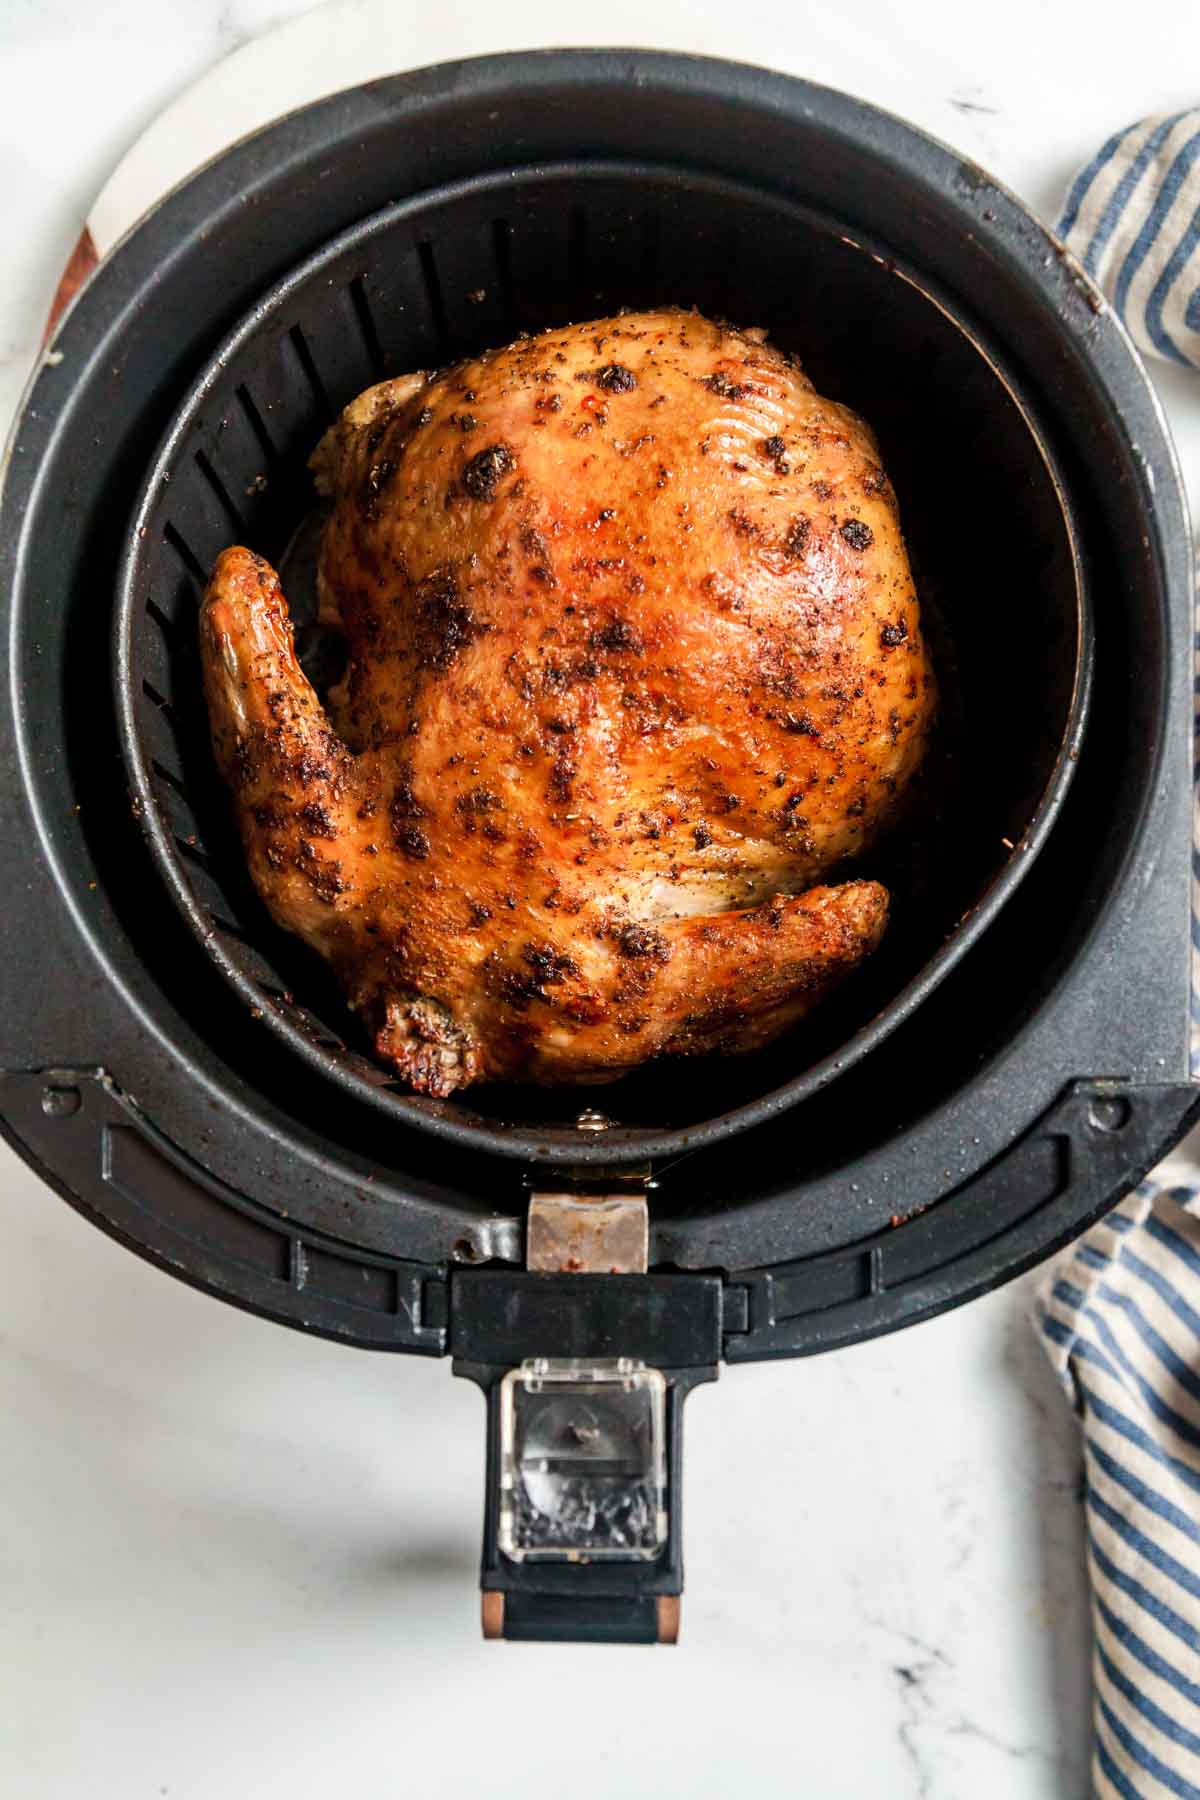 https://www.healthy-delicious.com/wp-content/uploads/2021/10/air-fryer-roast-chicken-3.jpg